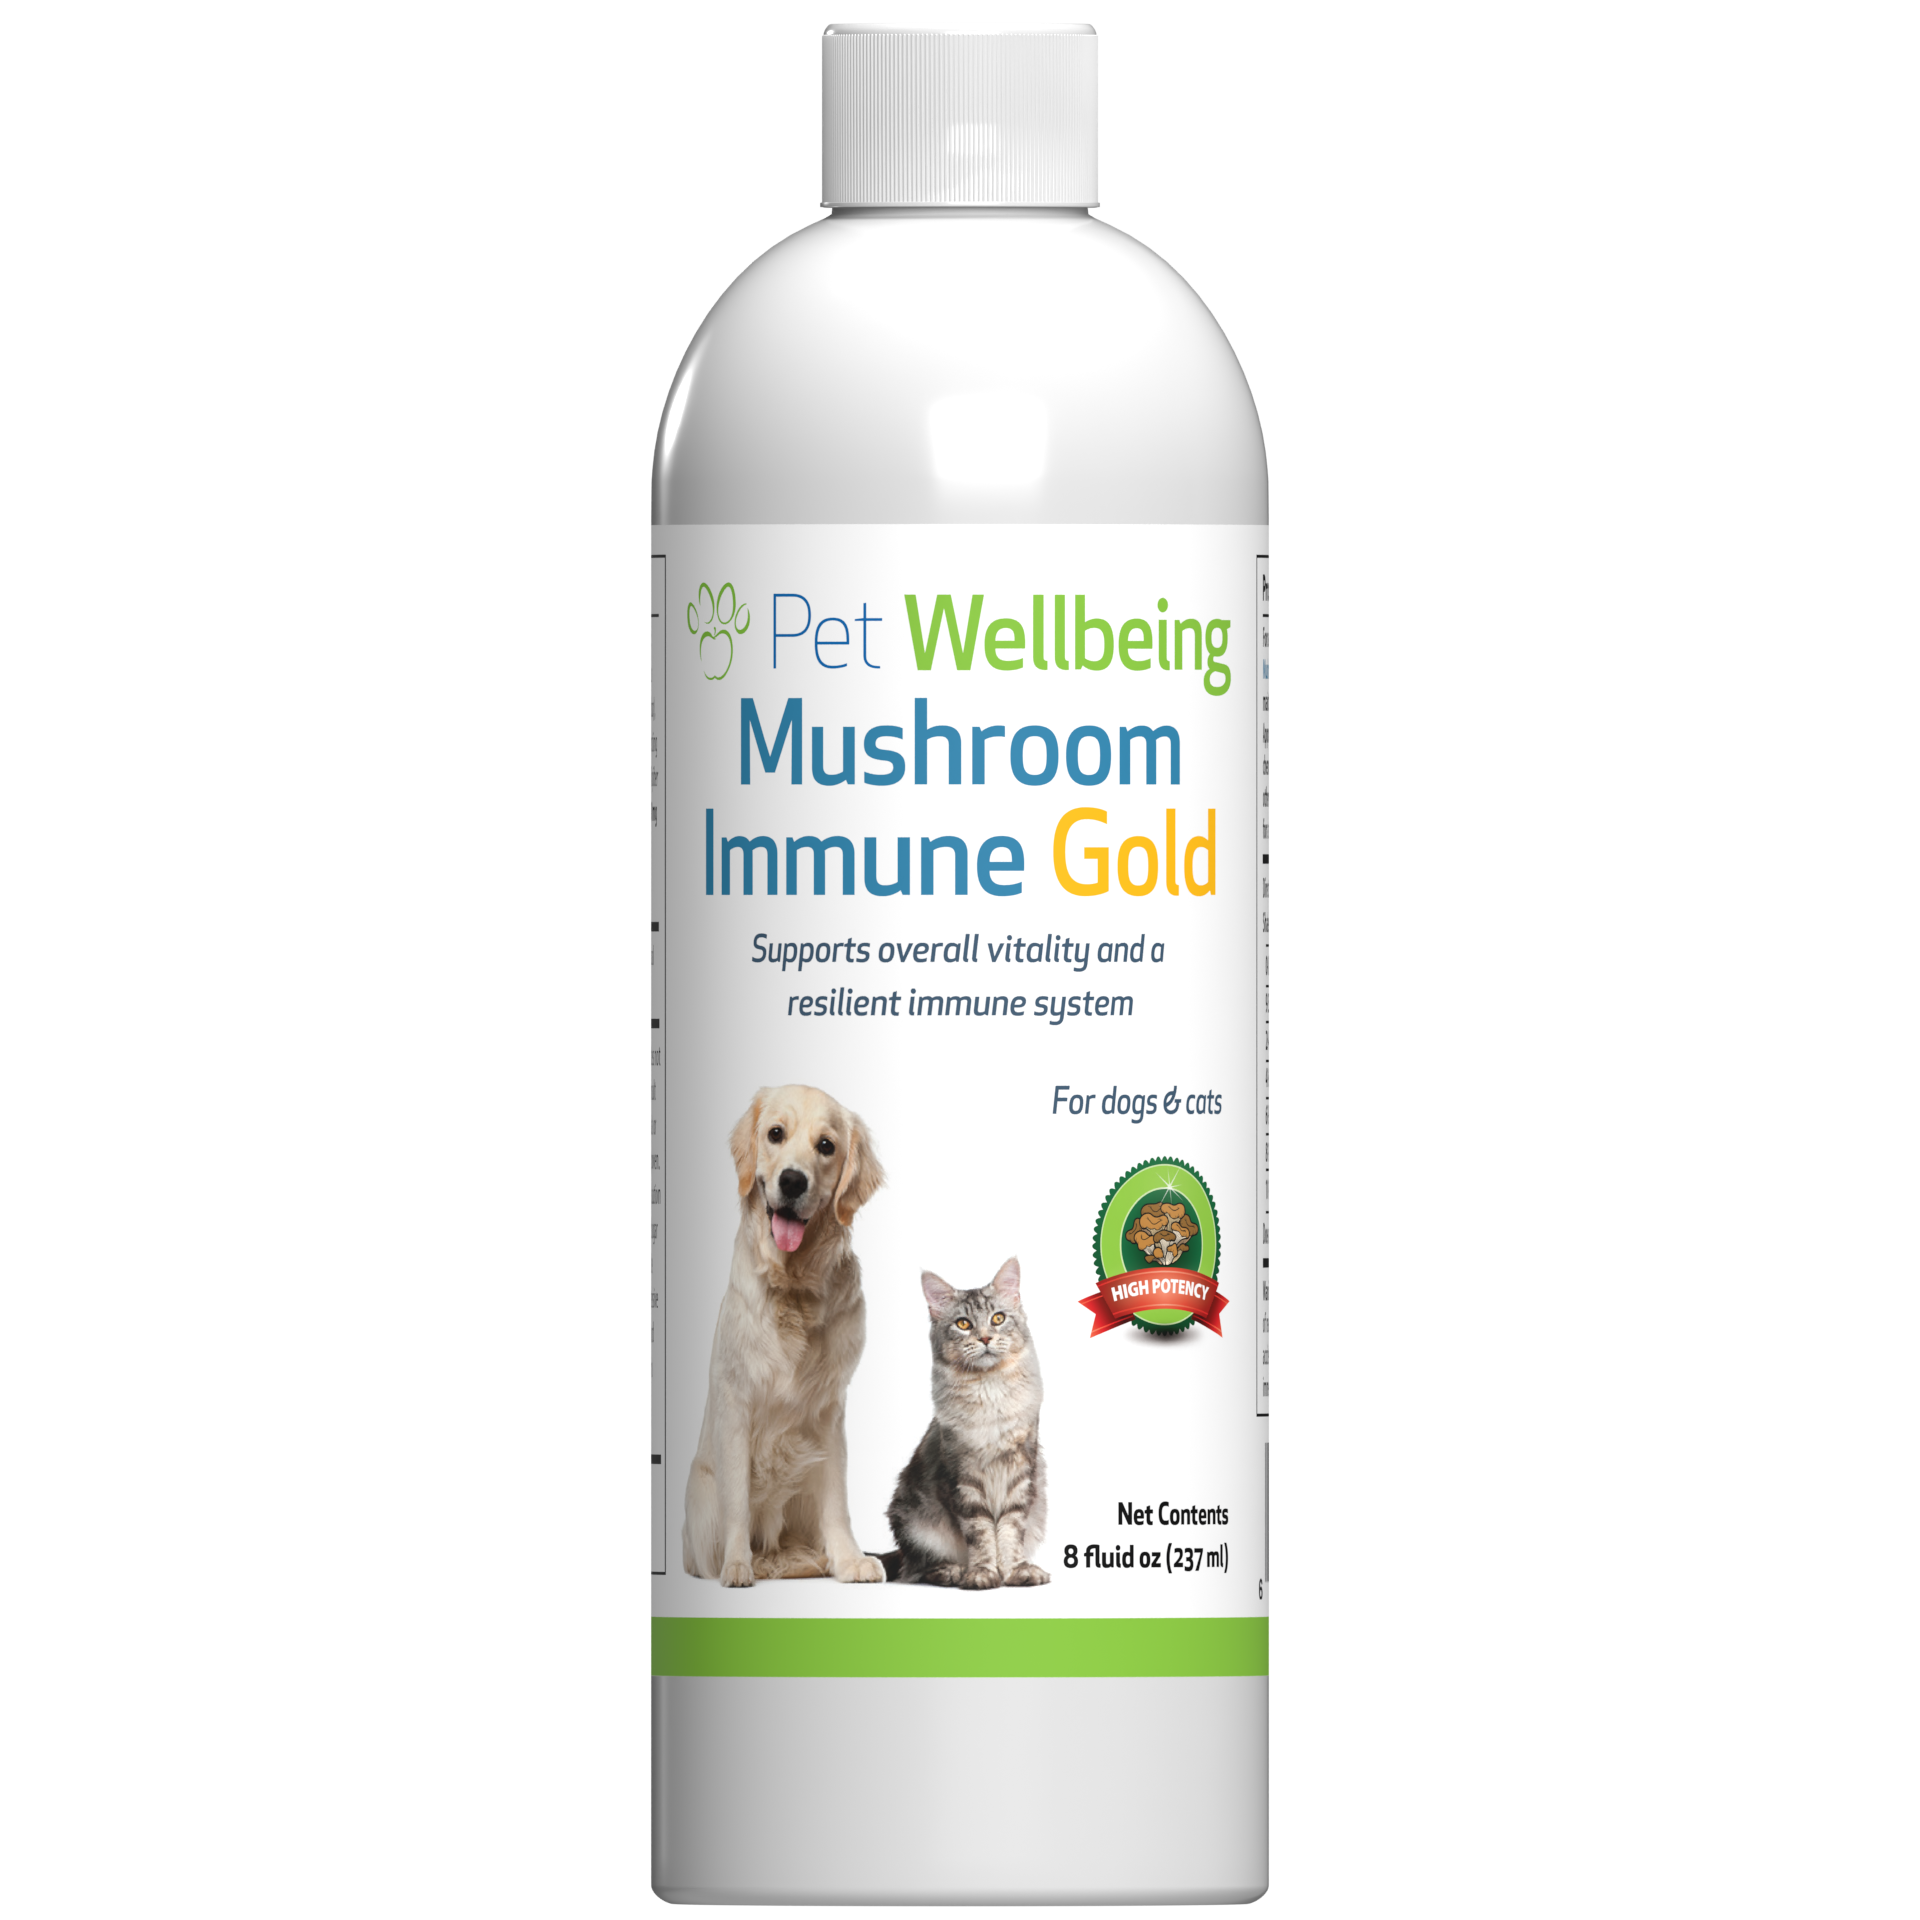 Immune gold. Now Mushroom immune.